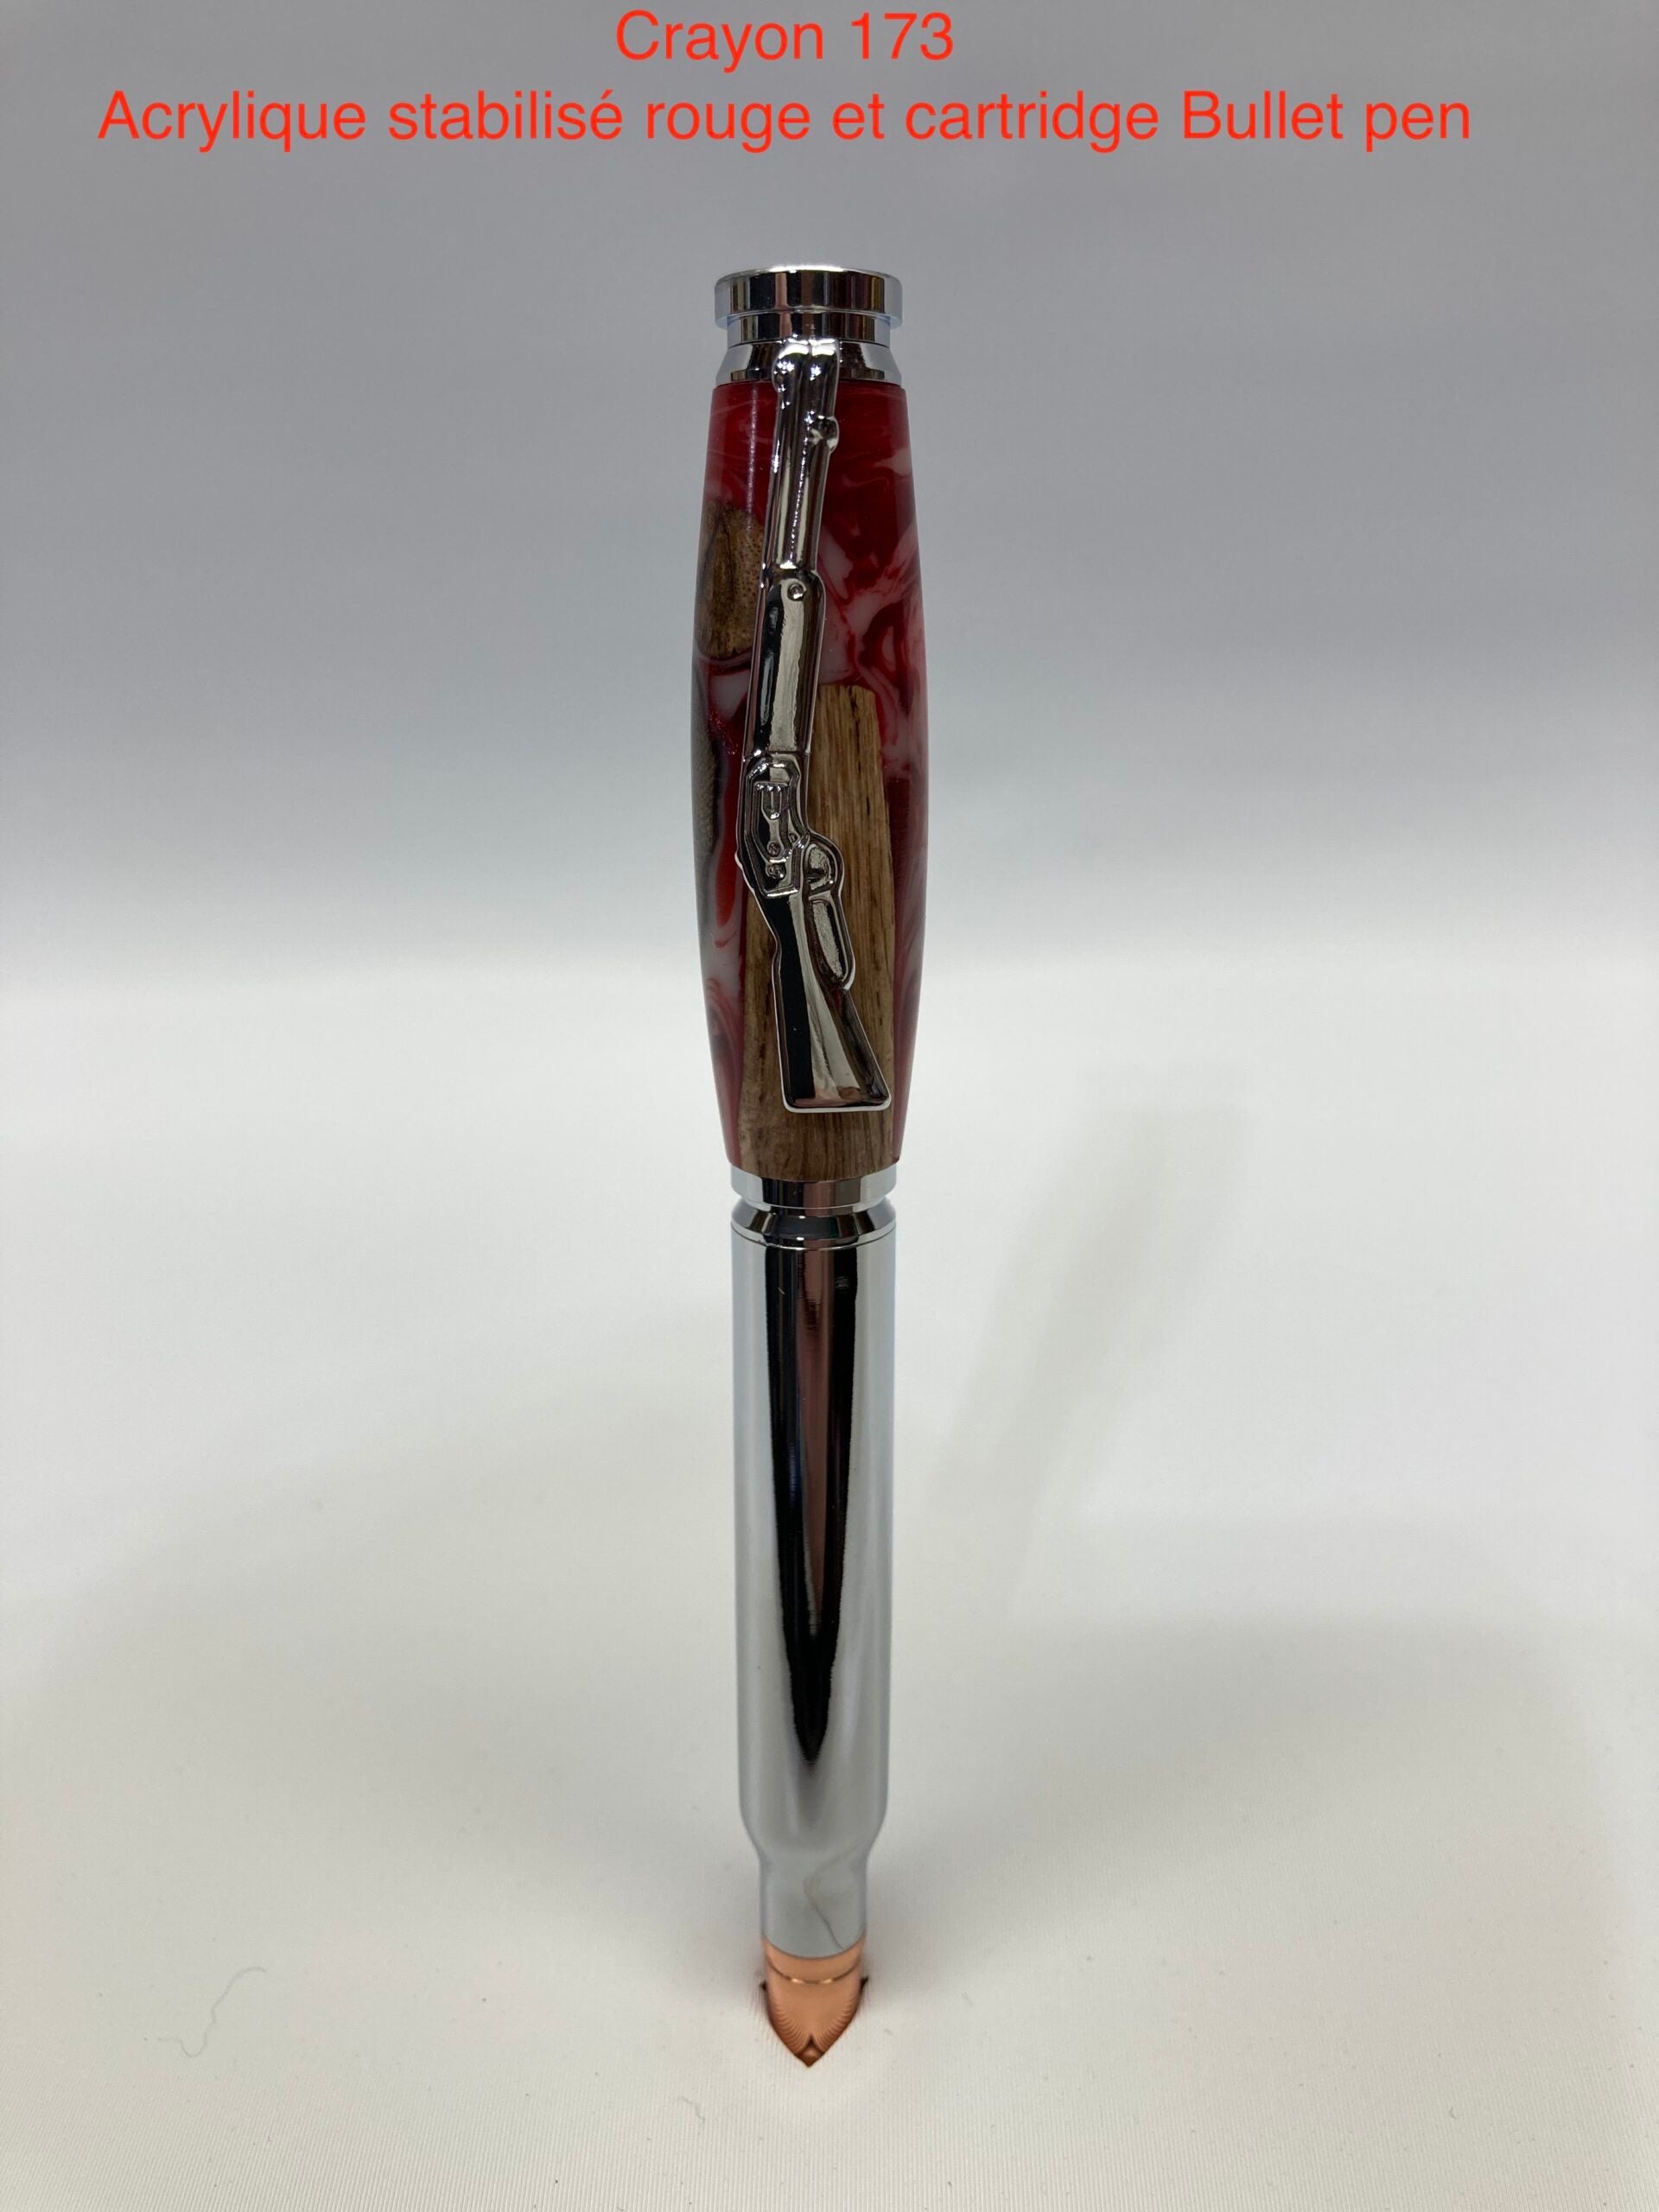 Carthridge bullet, red stabilized acrylic